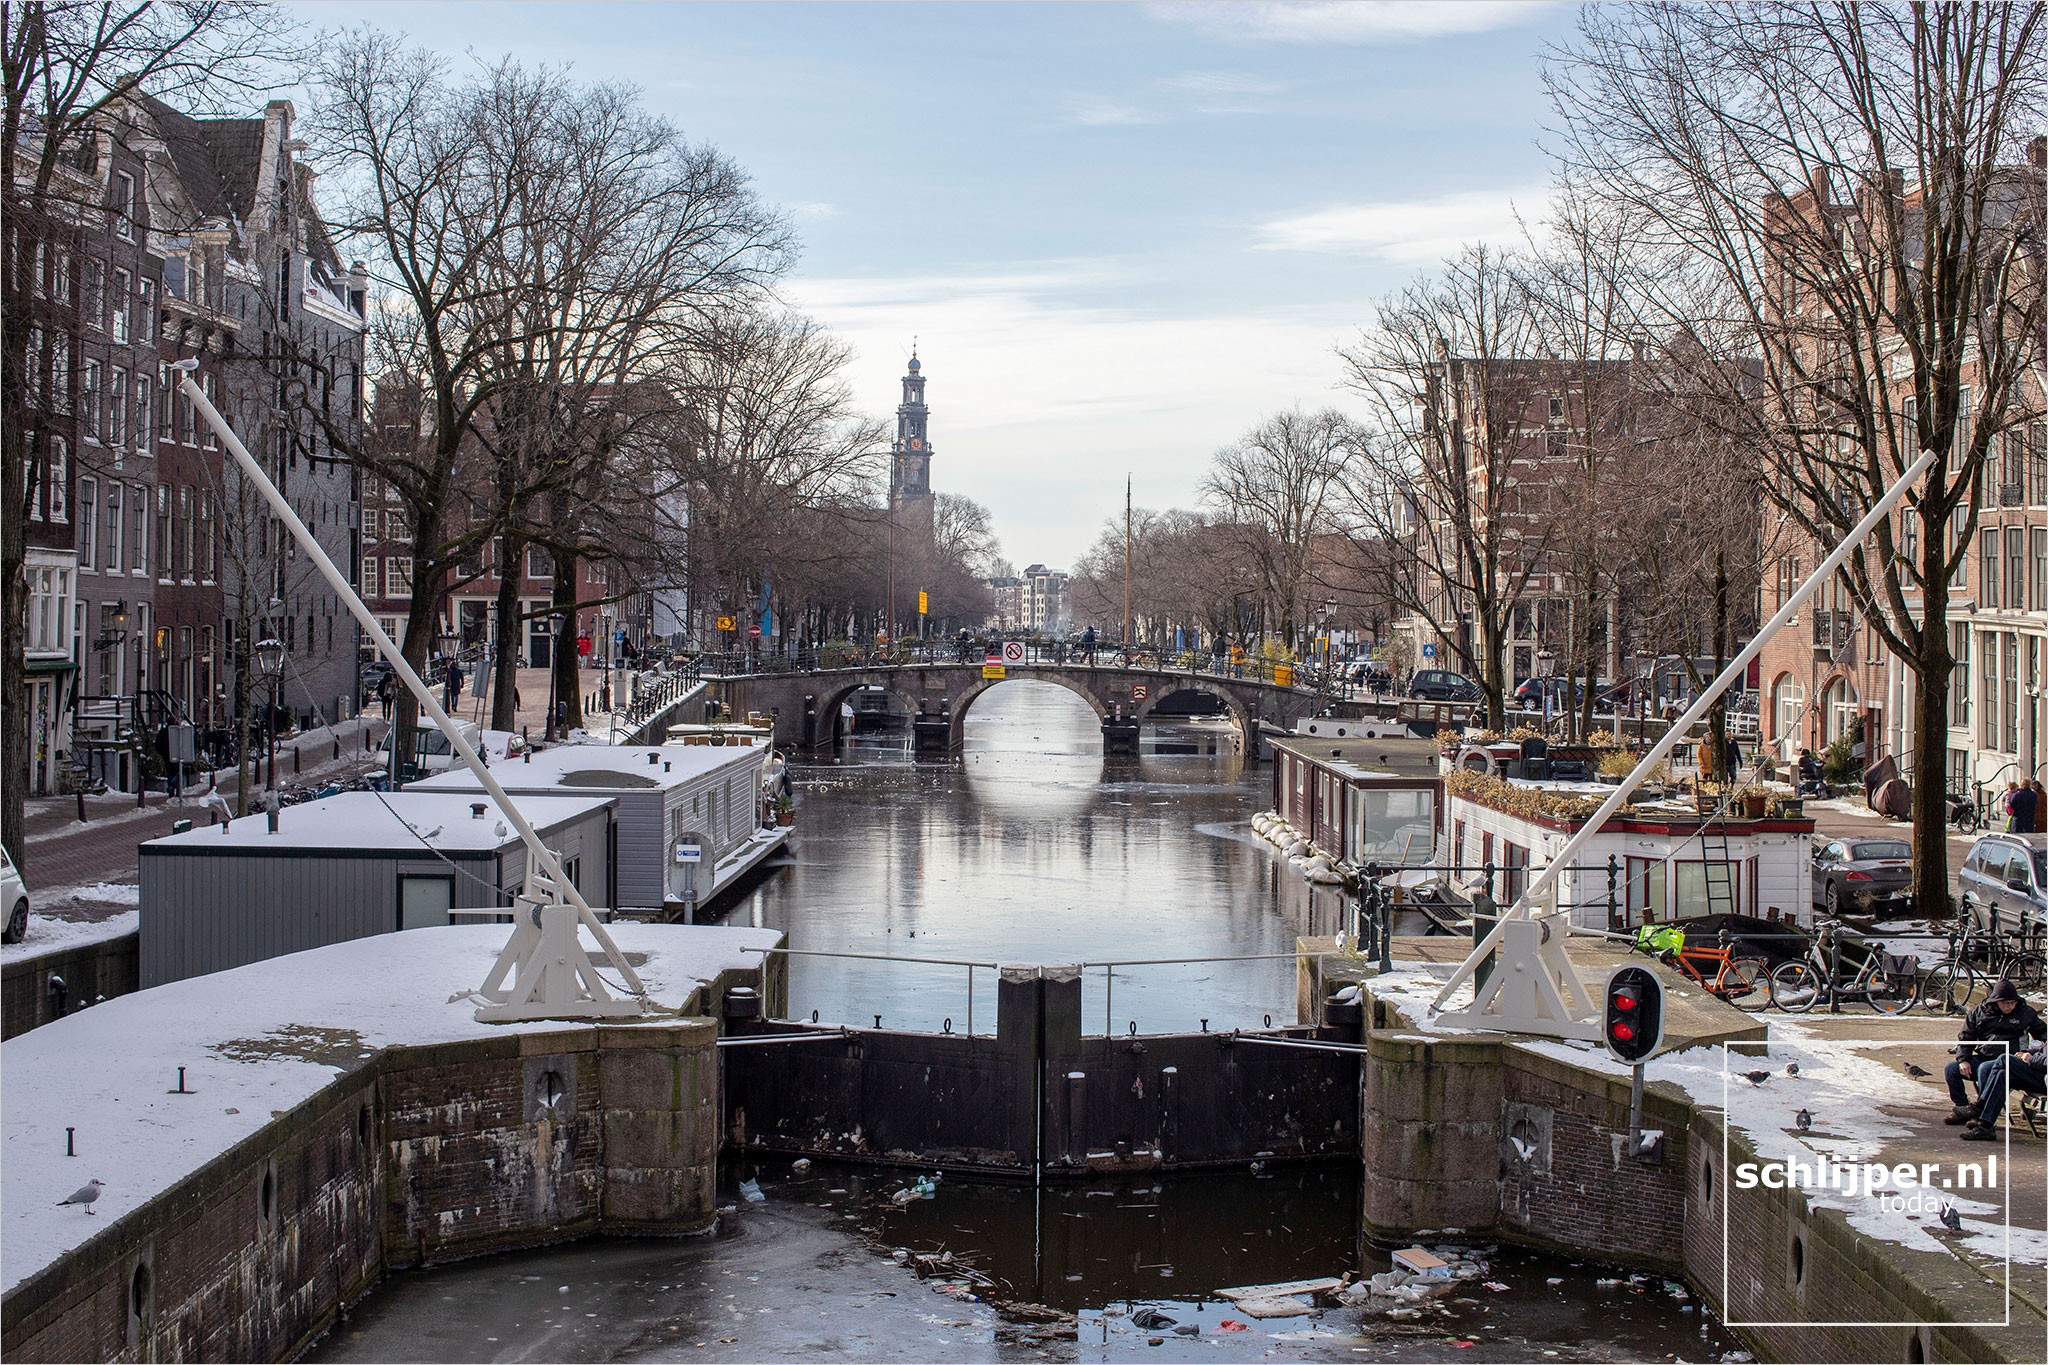 The Netherlands, Amsterdam, 14 februari 2021